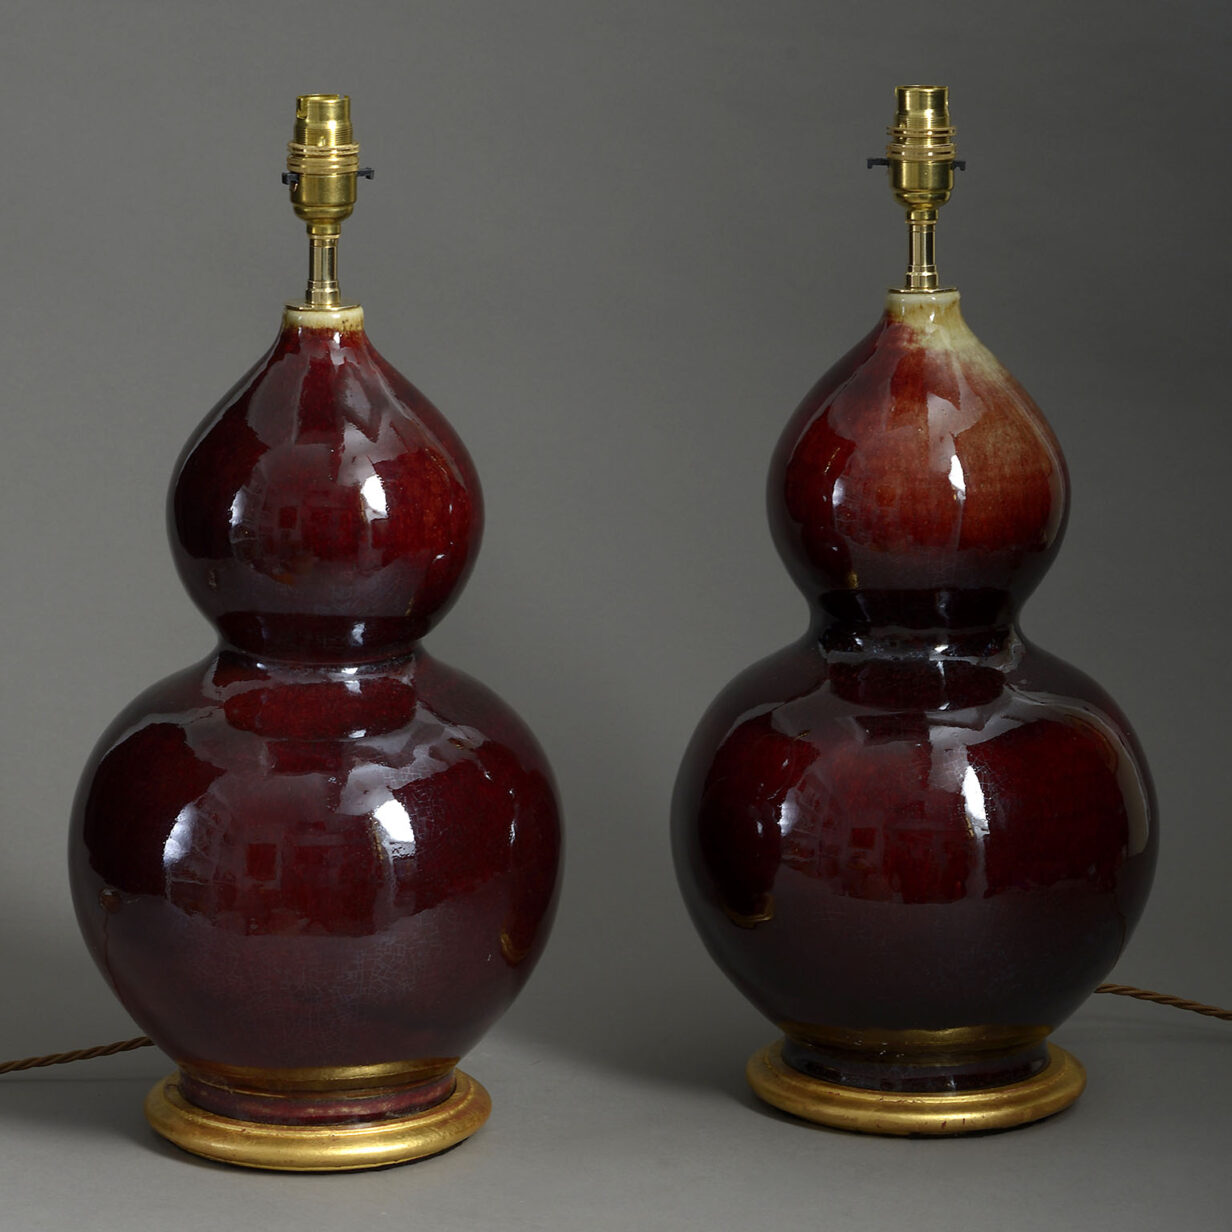 Pair of sang de boeuf gourd vase lamps